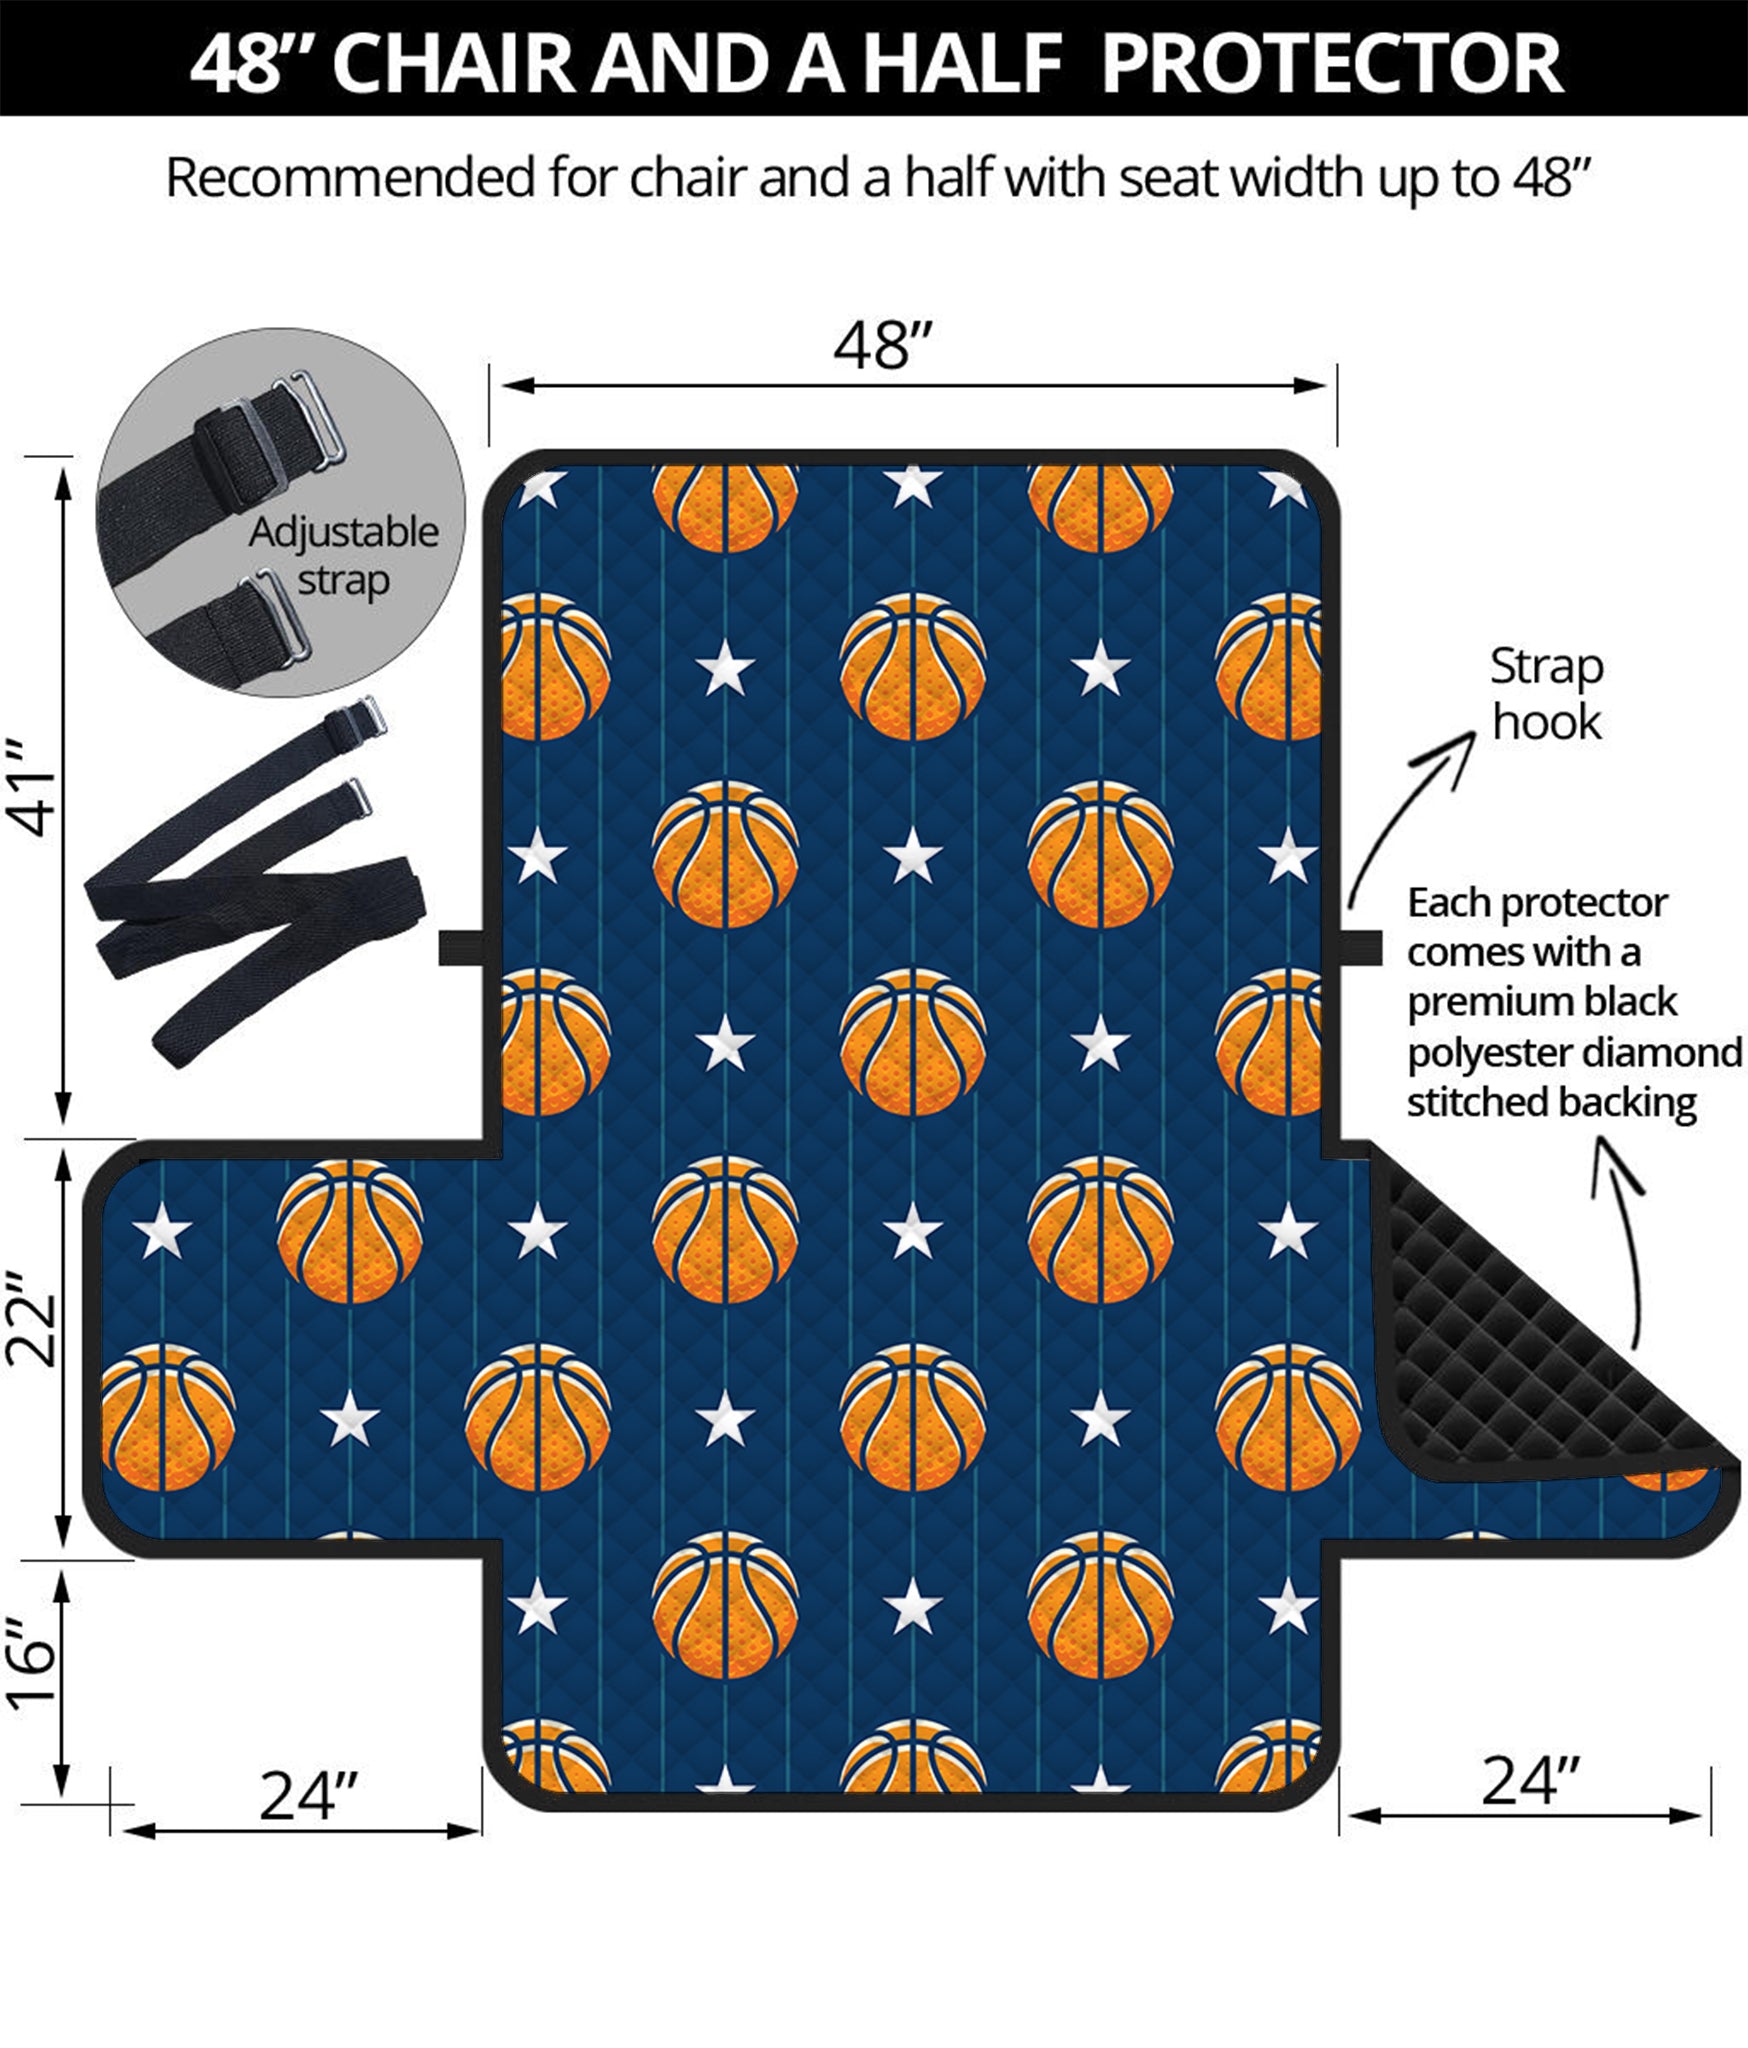 Basketball And Star Pattern Print Half Sofa Protector